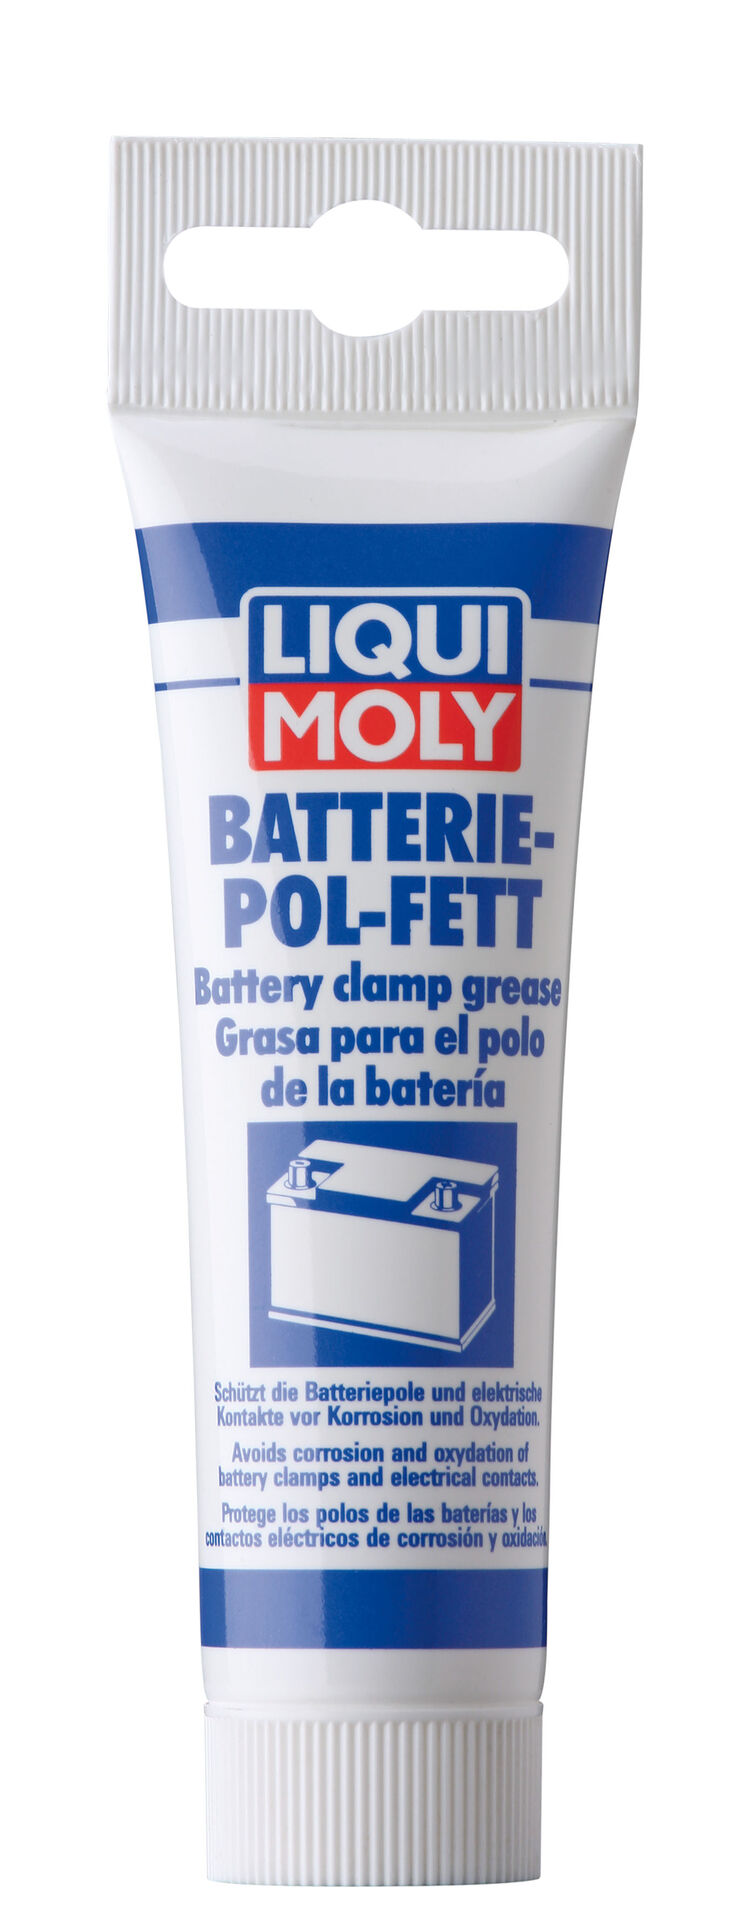 0,05l Liqui Moly Batterie-Pol-Fett 3140, Sonstige Fette